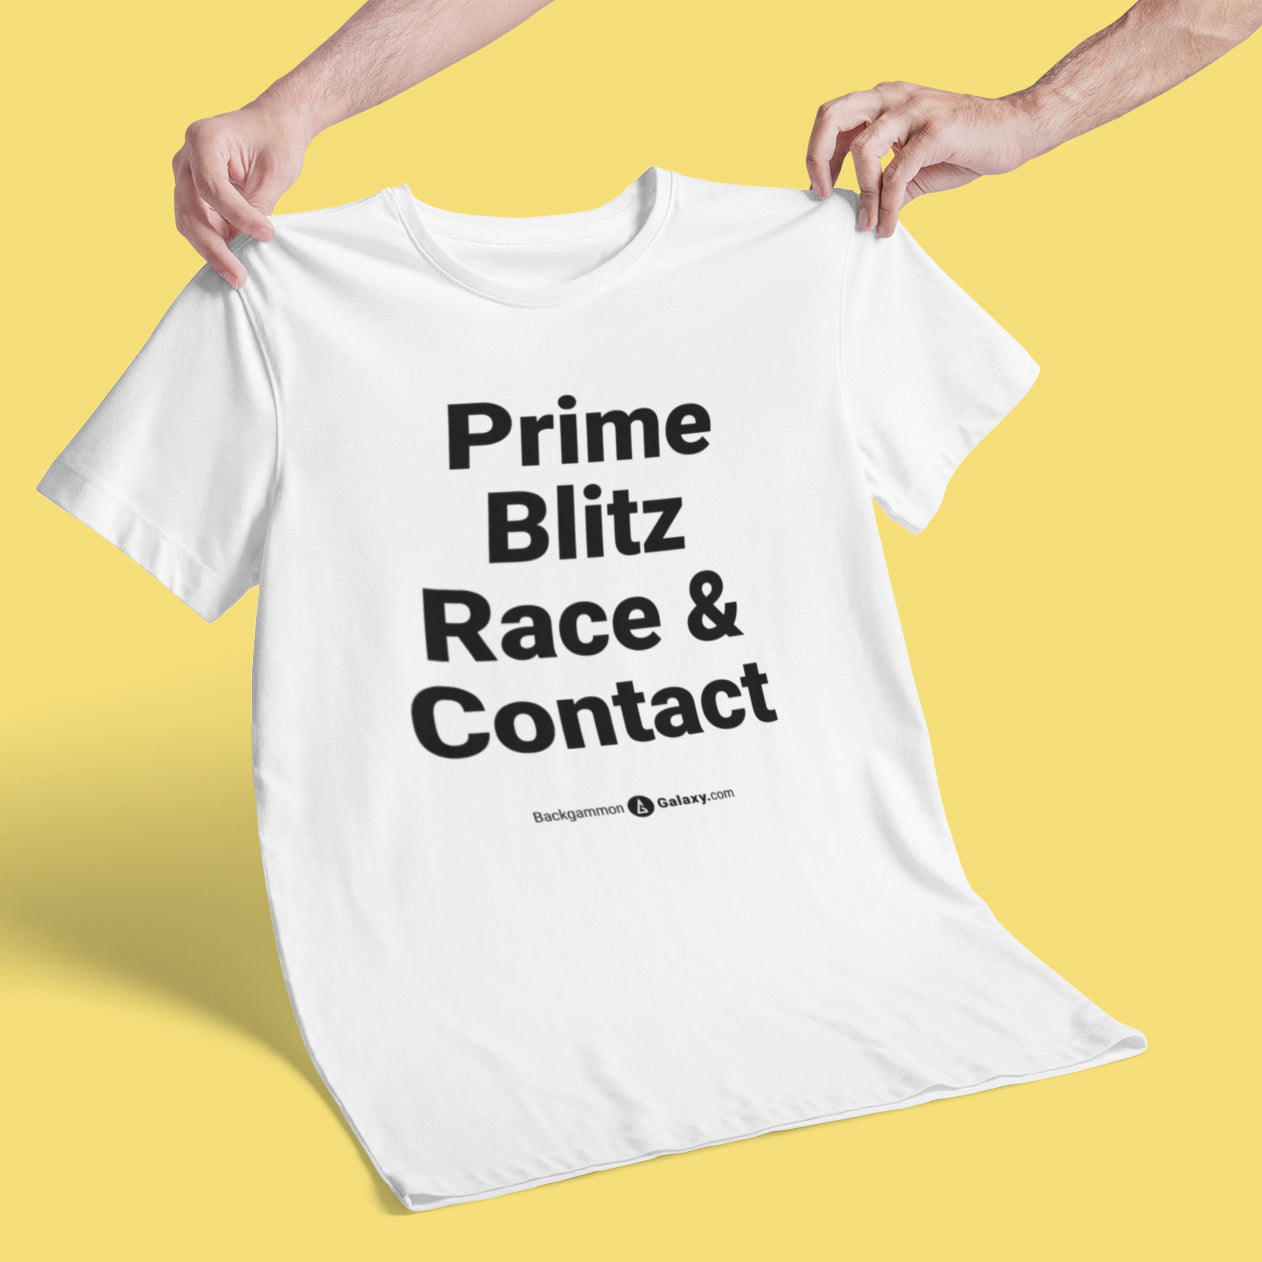 Prime, Blitz, Race & Contact Unisex Backgammon T-Shirt - Backgammon Galaxy S / White T-shirt